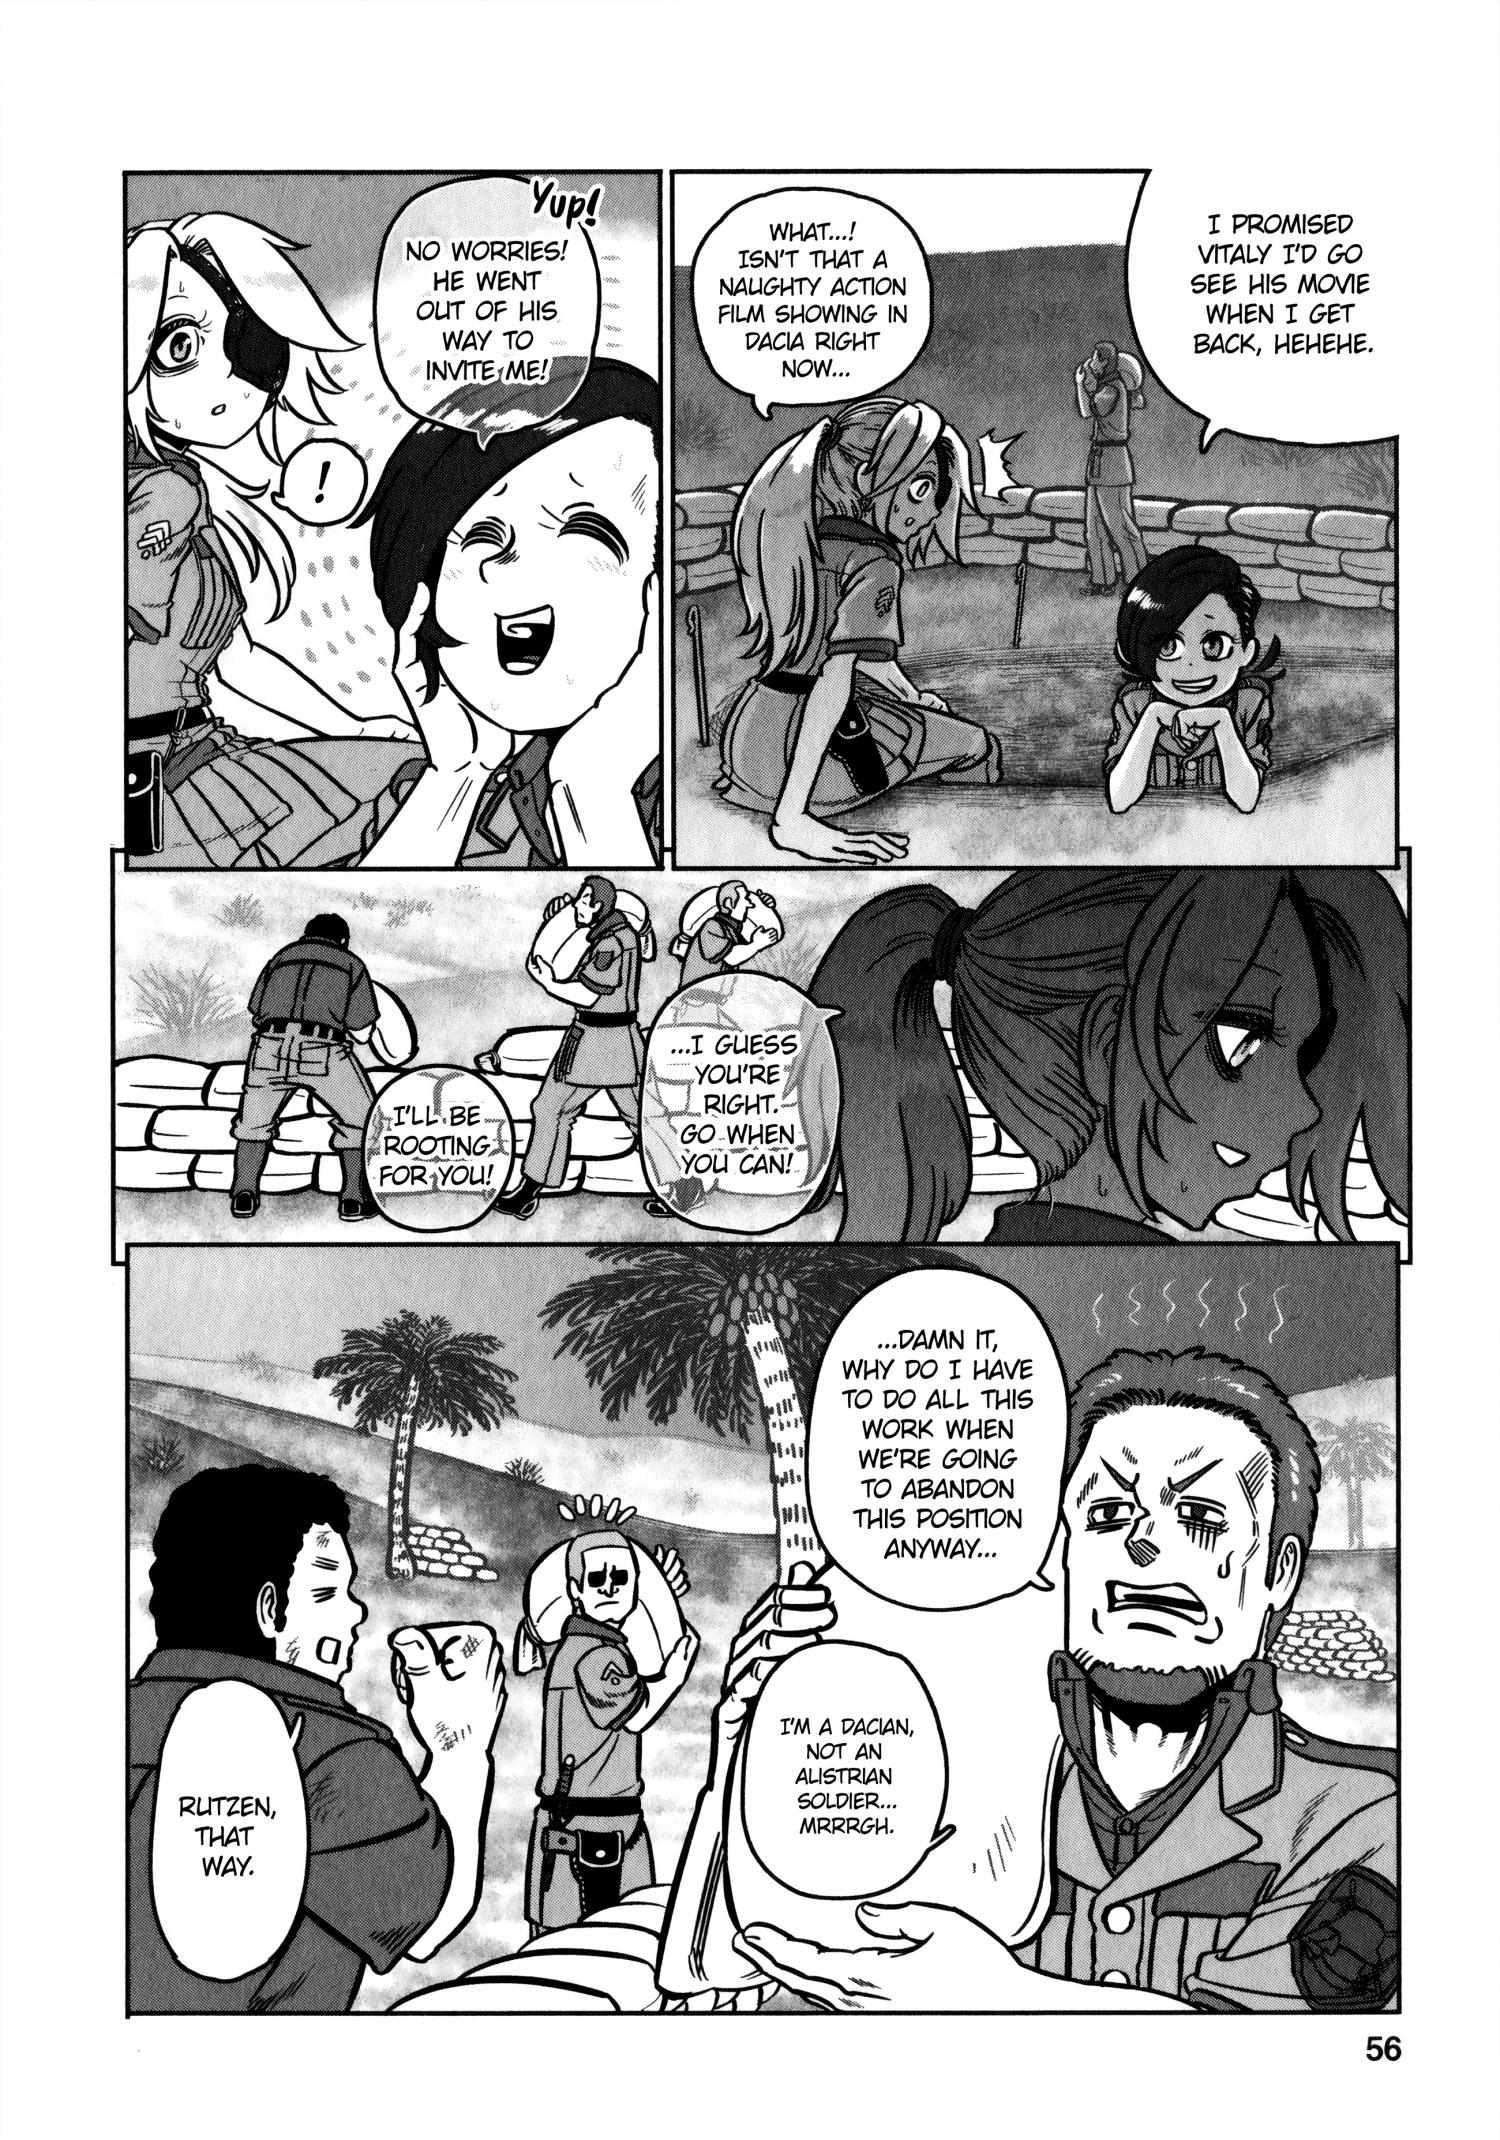 Groundless - Sekigan No Sogekihei - 32 page 19-9521c7d0